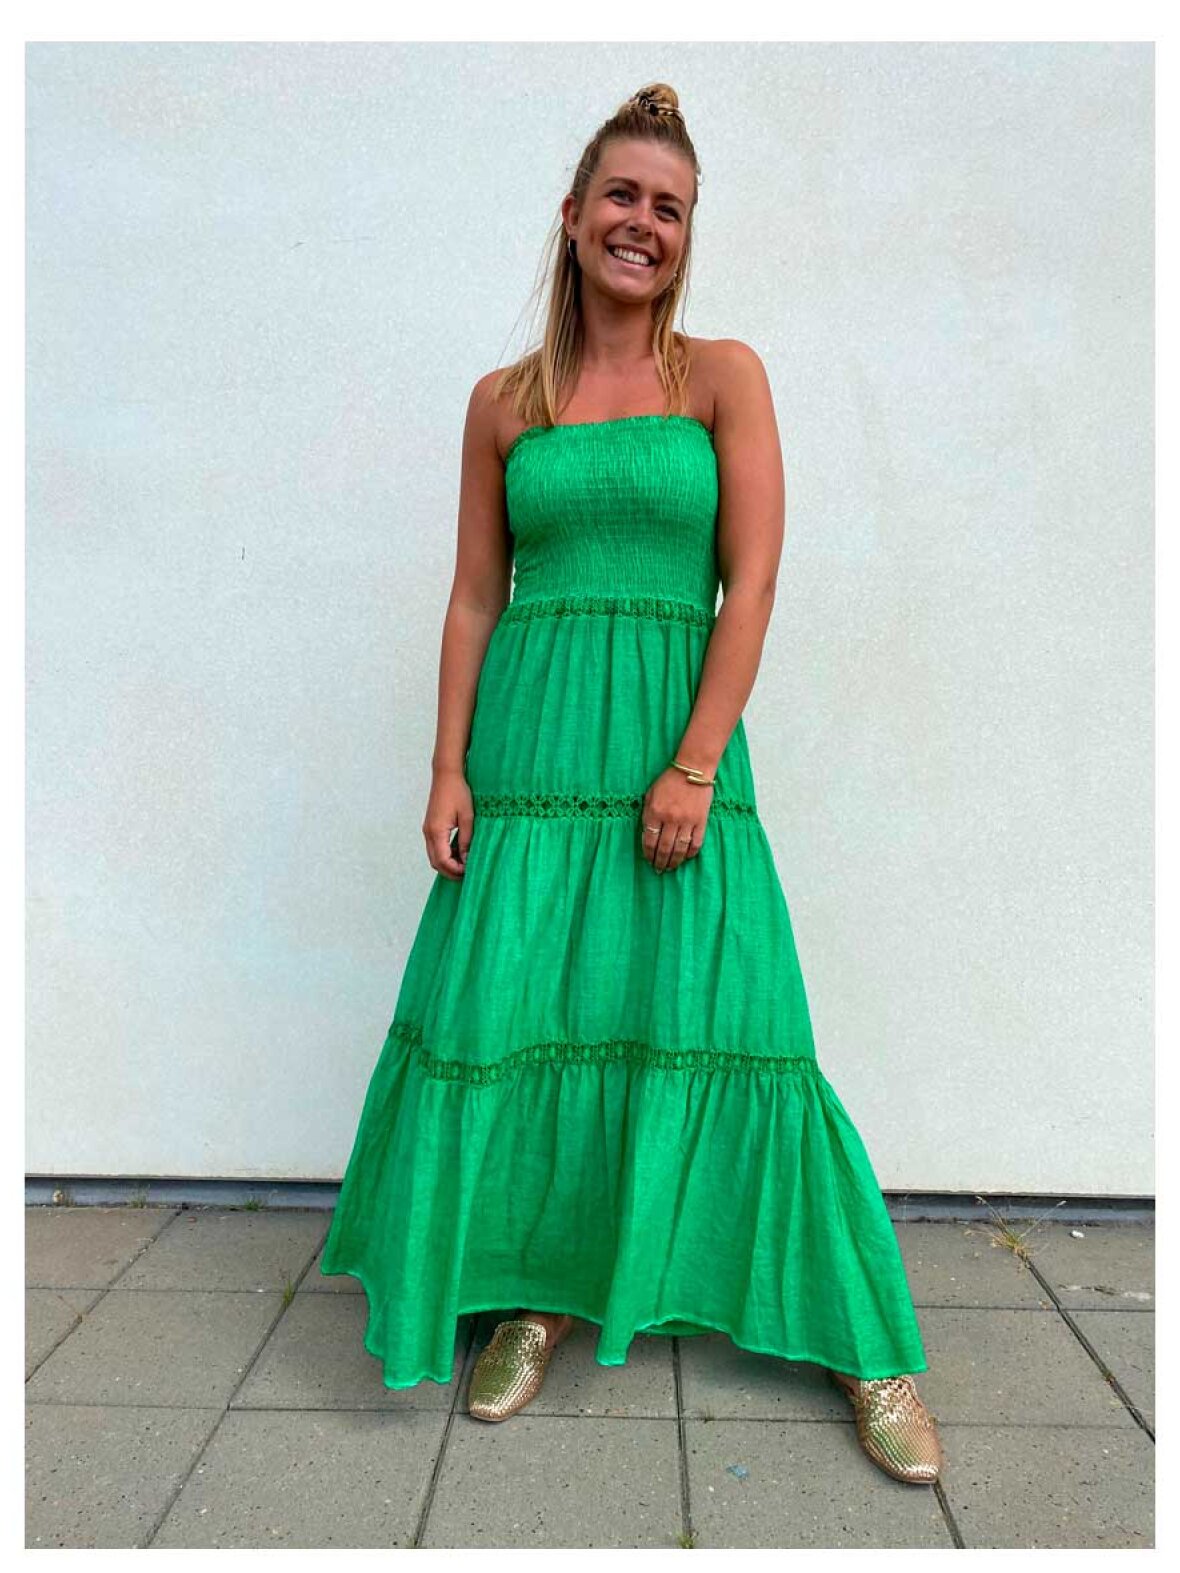 Alaska Profet sollys A'POKE - Banditas Oyester Dress Gucci Green - Shop grøn stropløs kjole